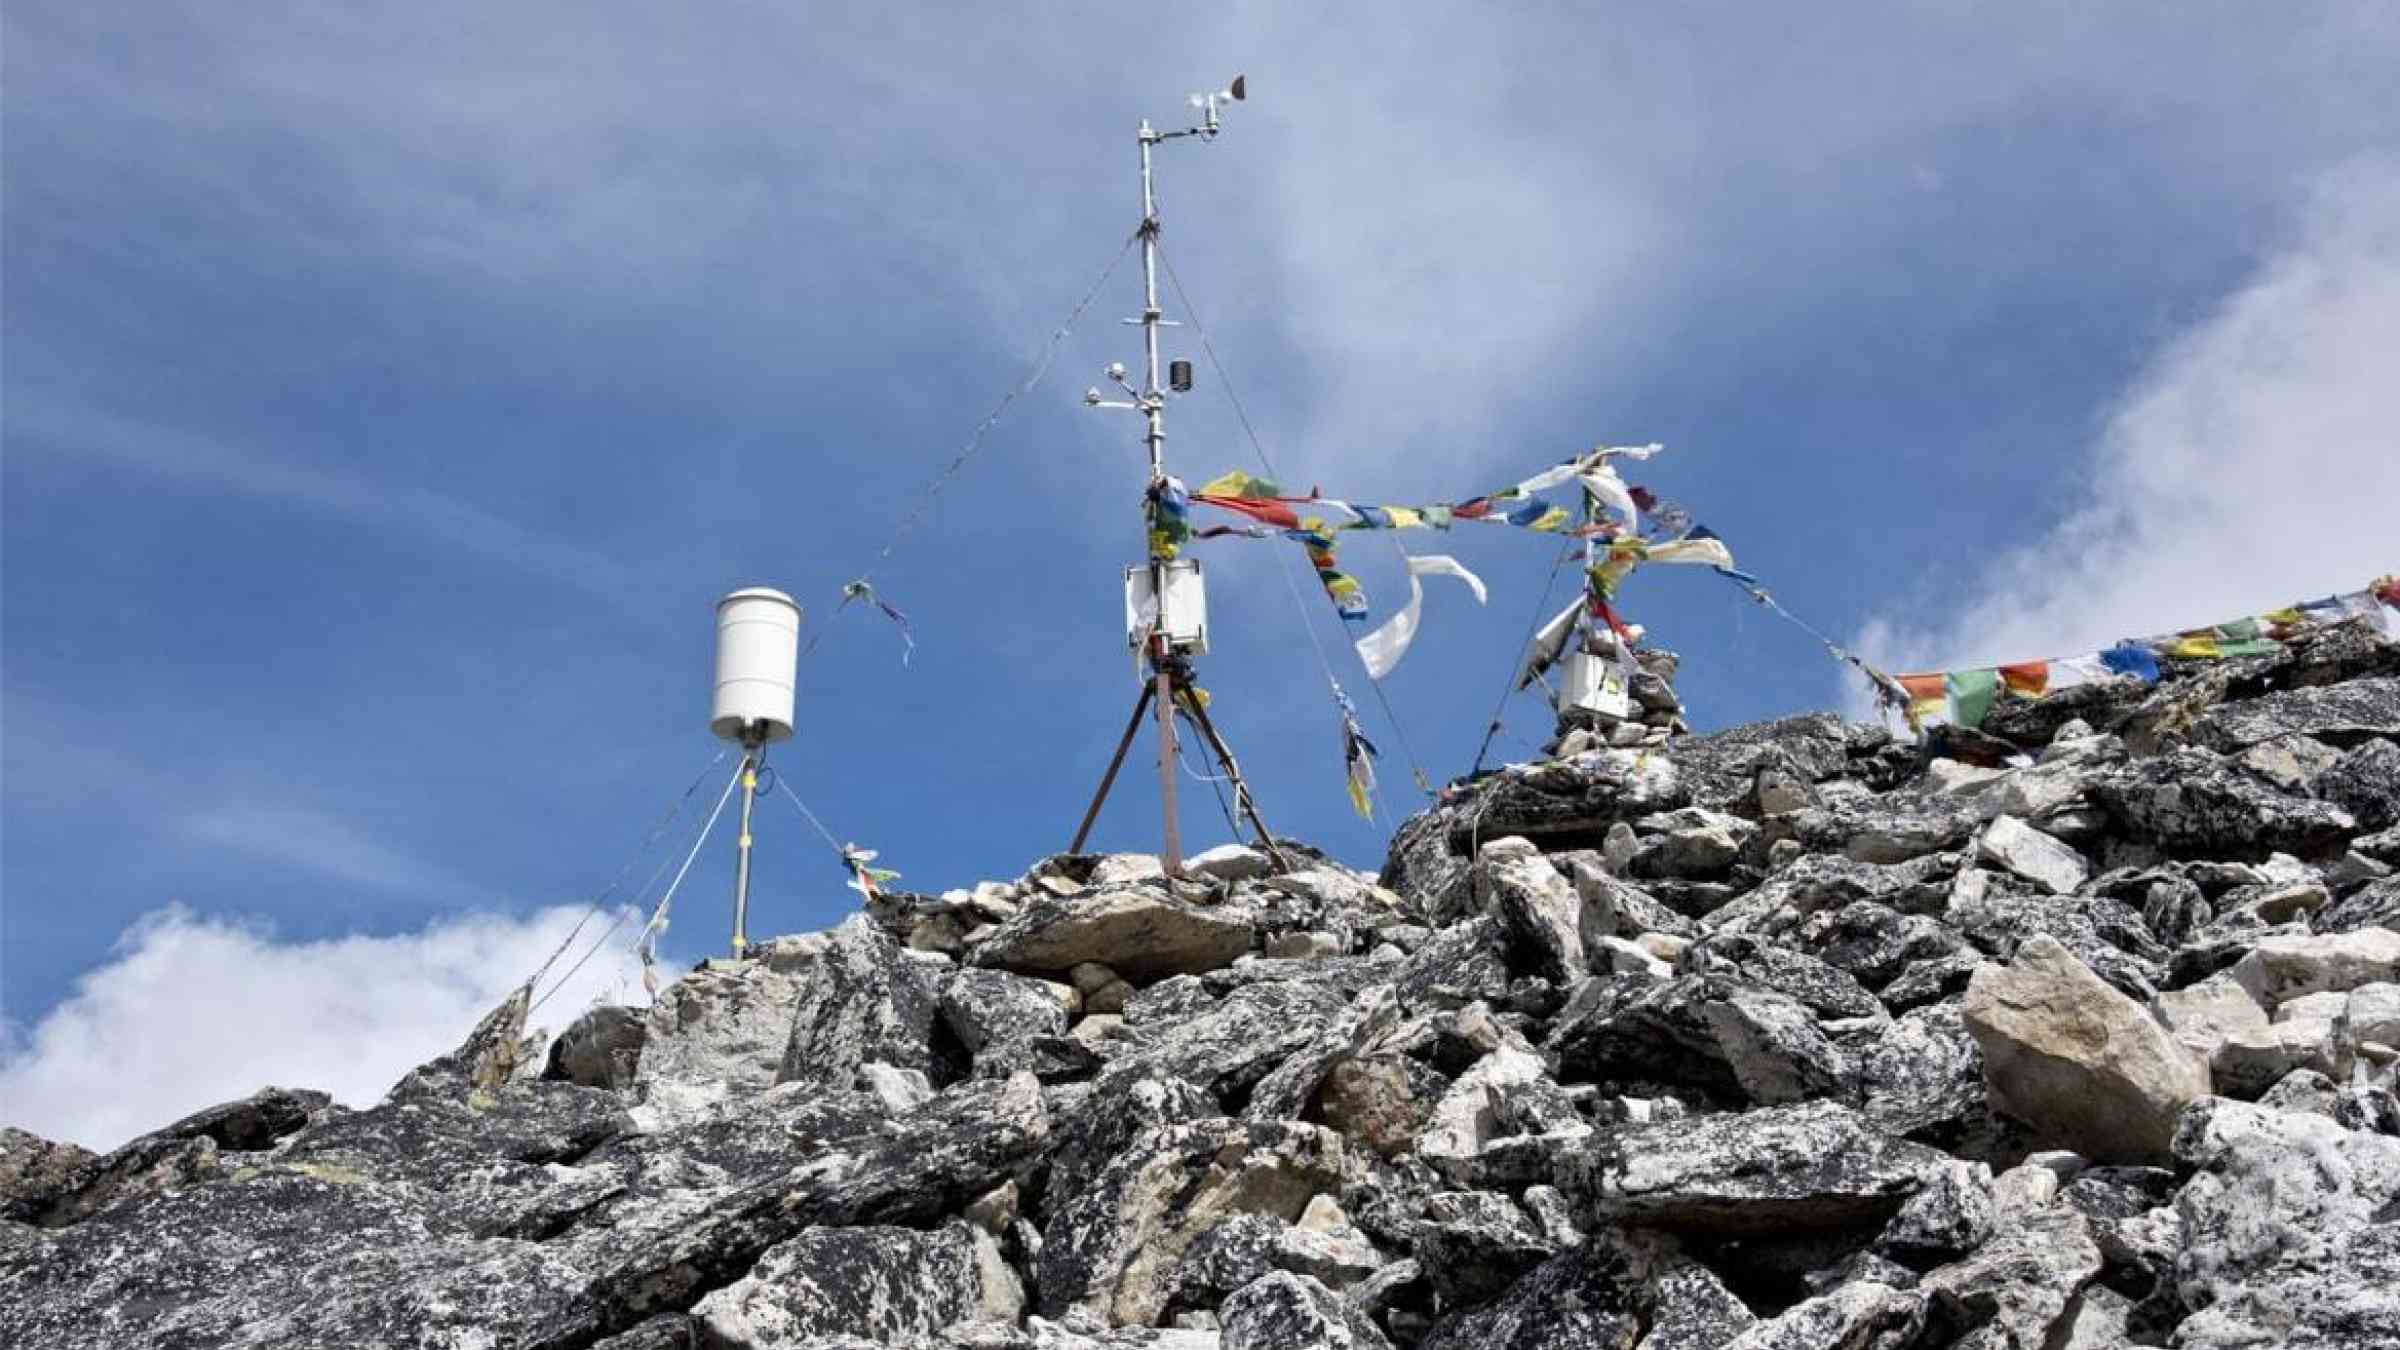 Weather station positioned on a rocky hillside, Nepal